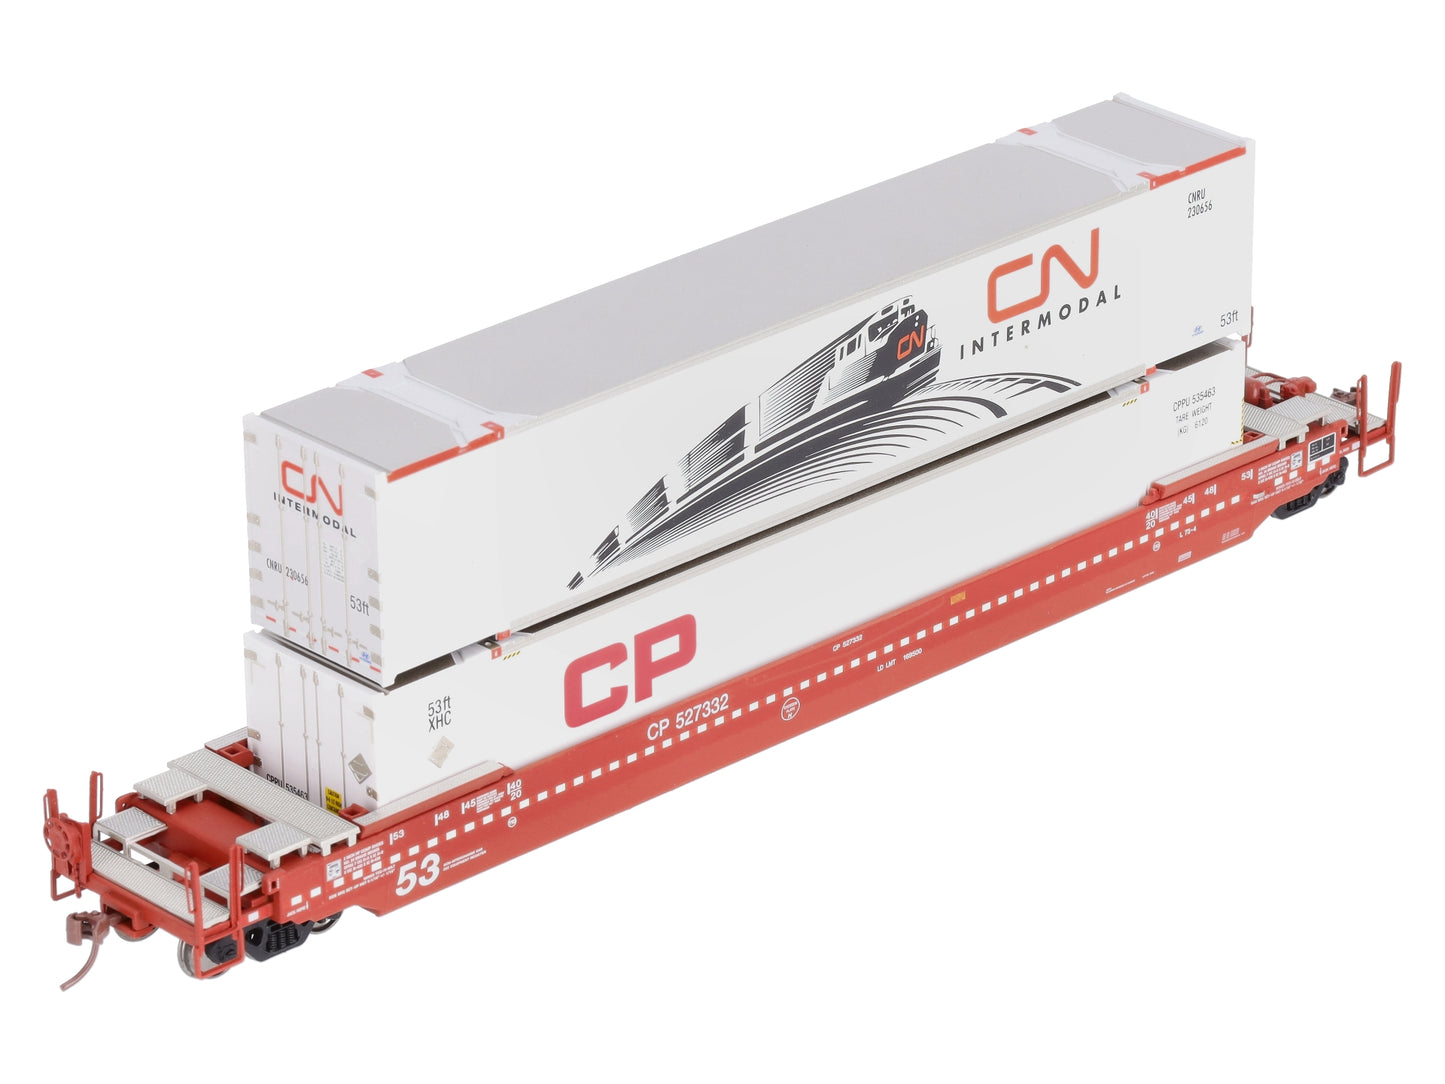 Rapido Trains 401004 HO Gunderson 53' Canadian Pacifc Husky Stack Car # 527332 LN/Box